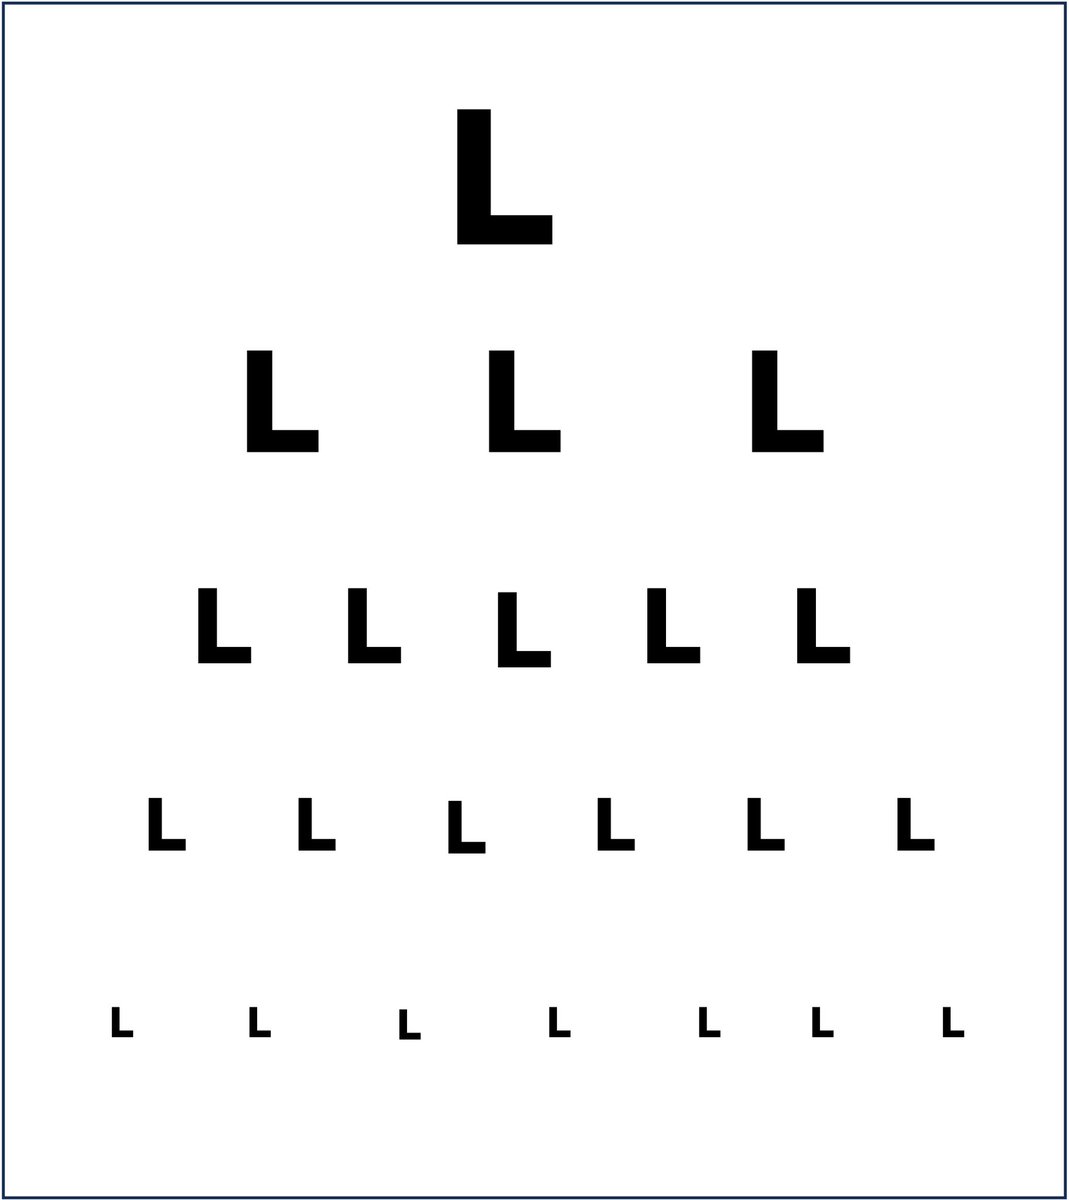 The Carlton eye test 

#AFLSwansBlues